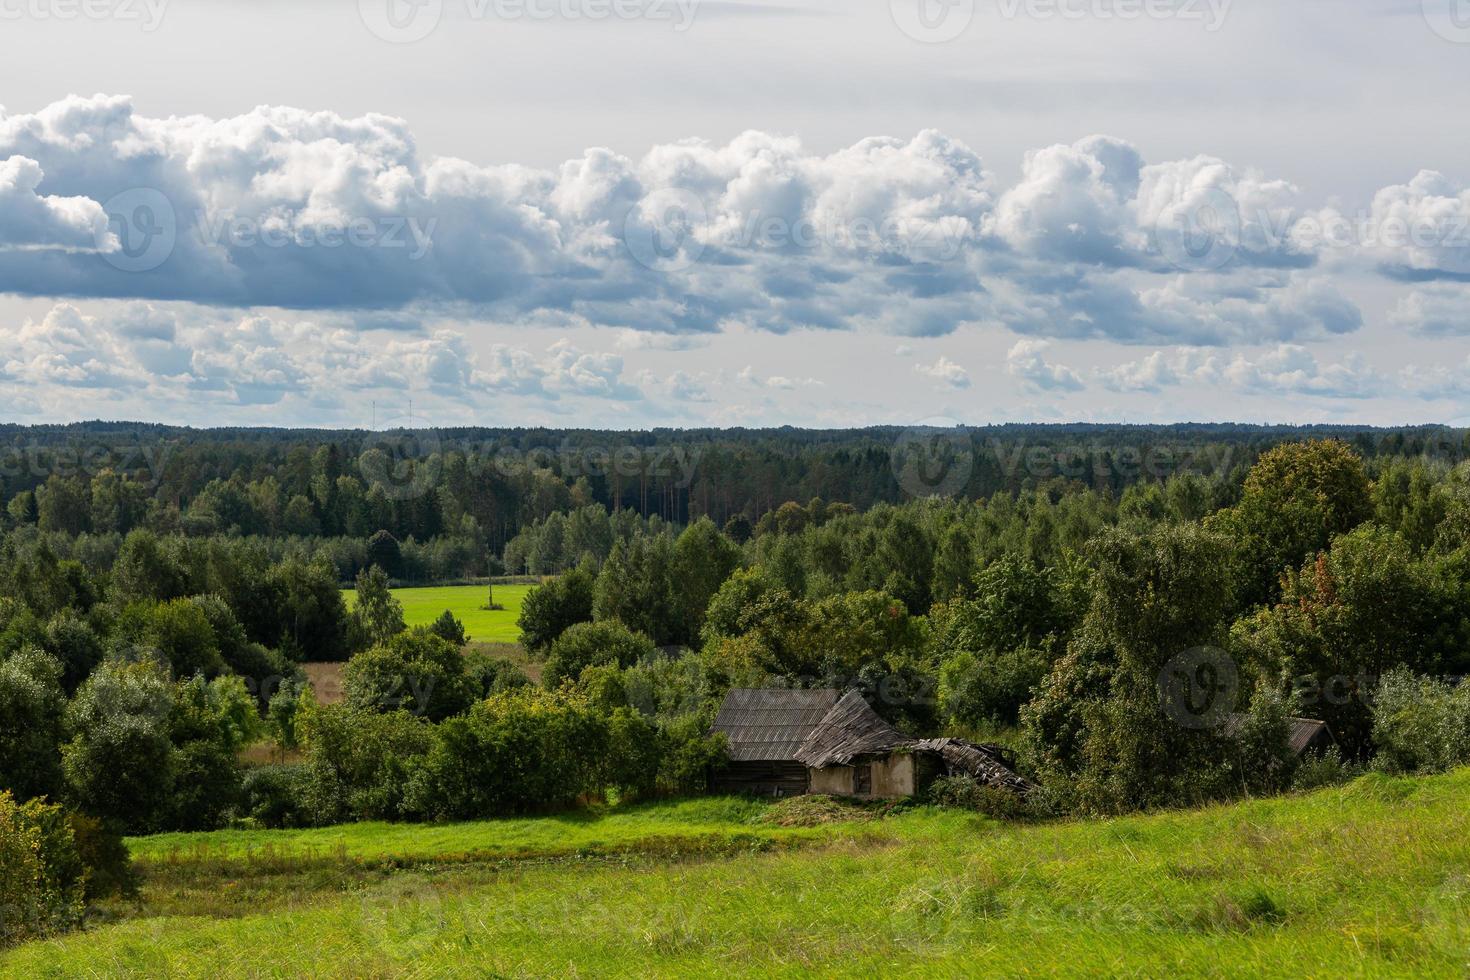 Summer Landscapes  in Latvia photo